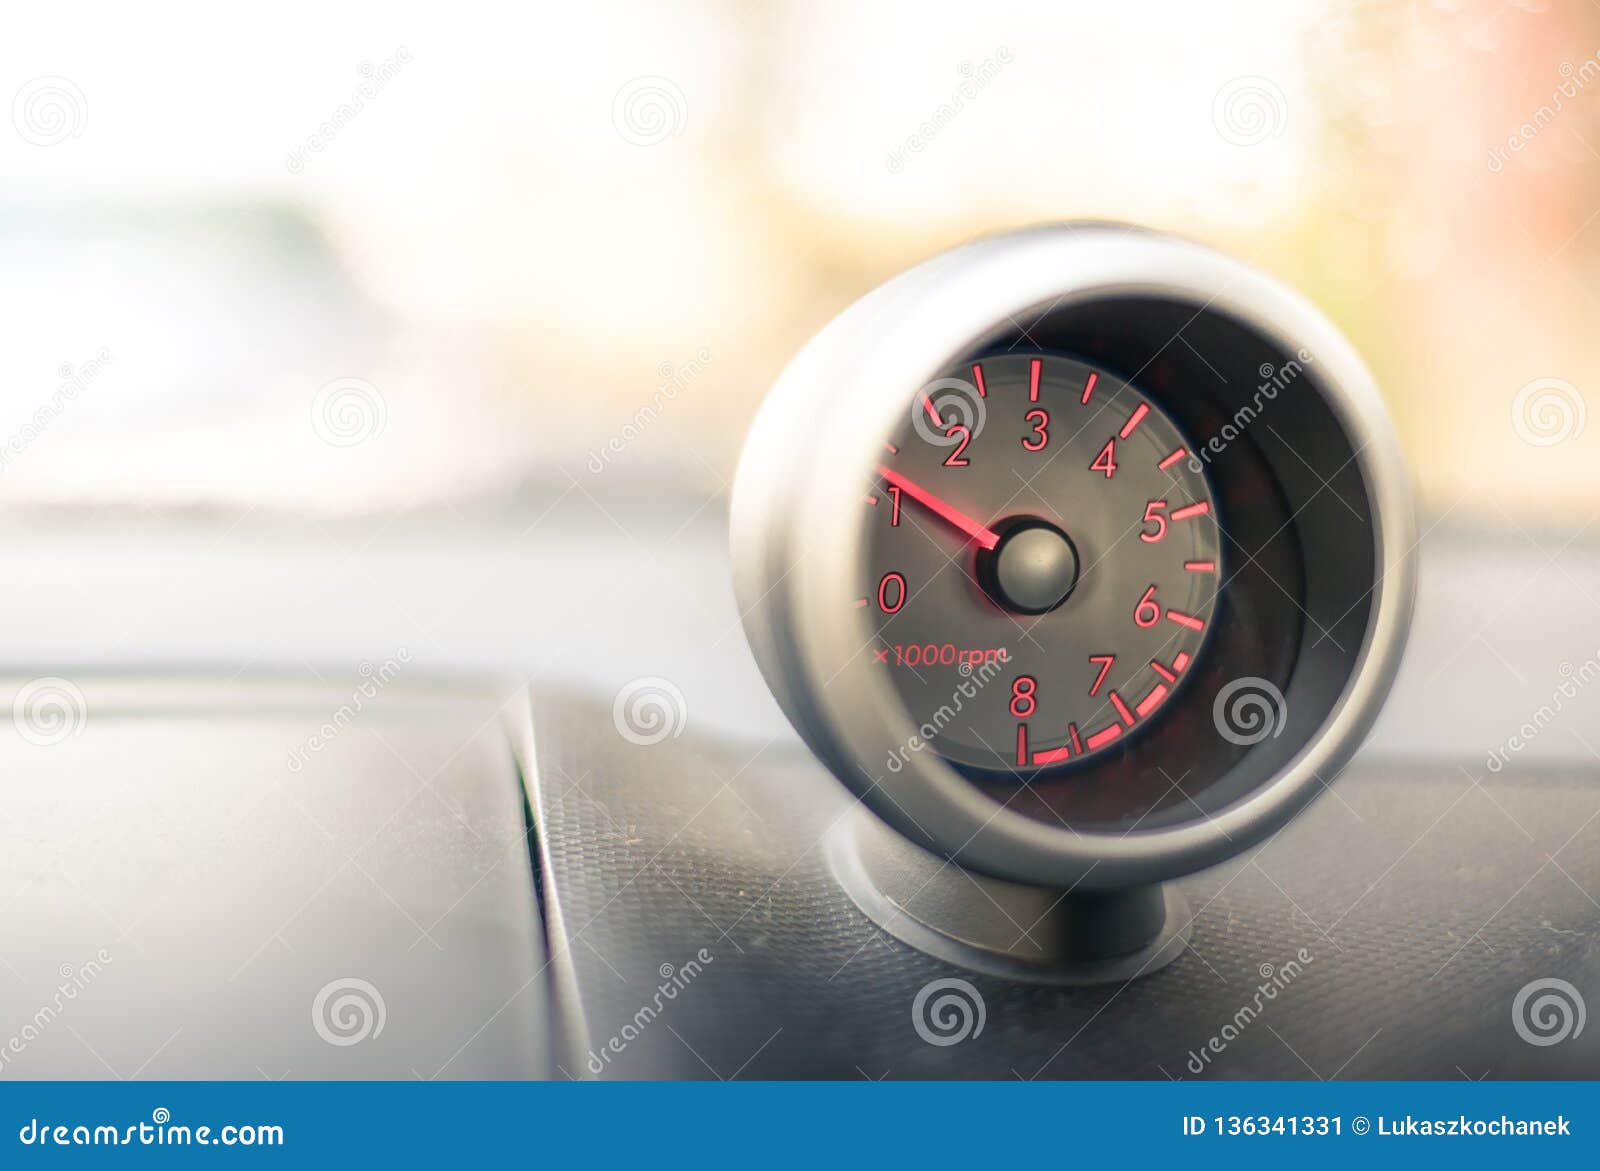 vehicle dashboard gauge - rpm - revolutions per minute